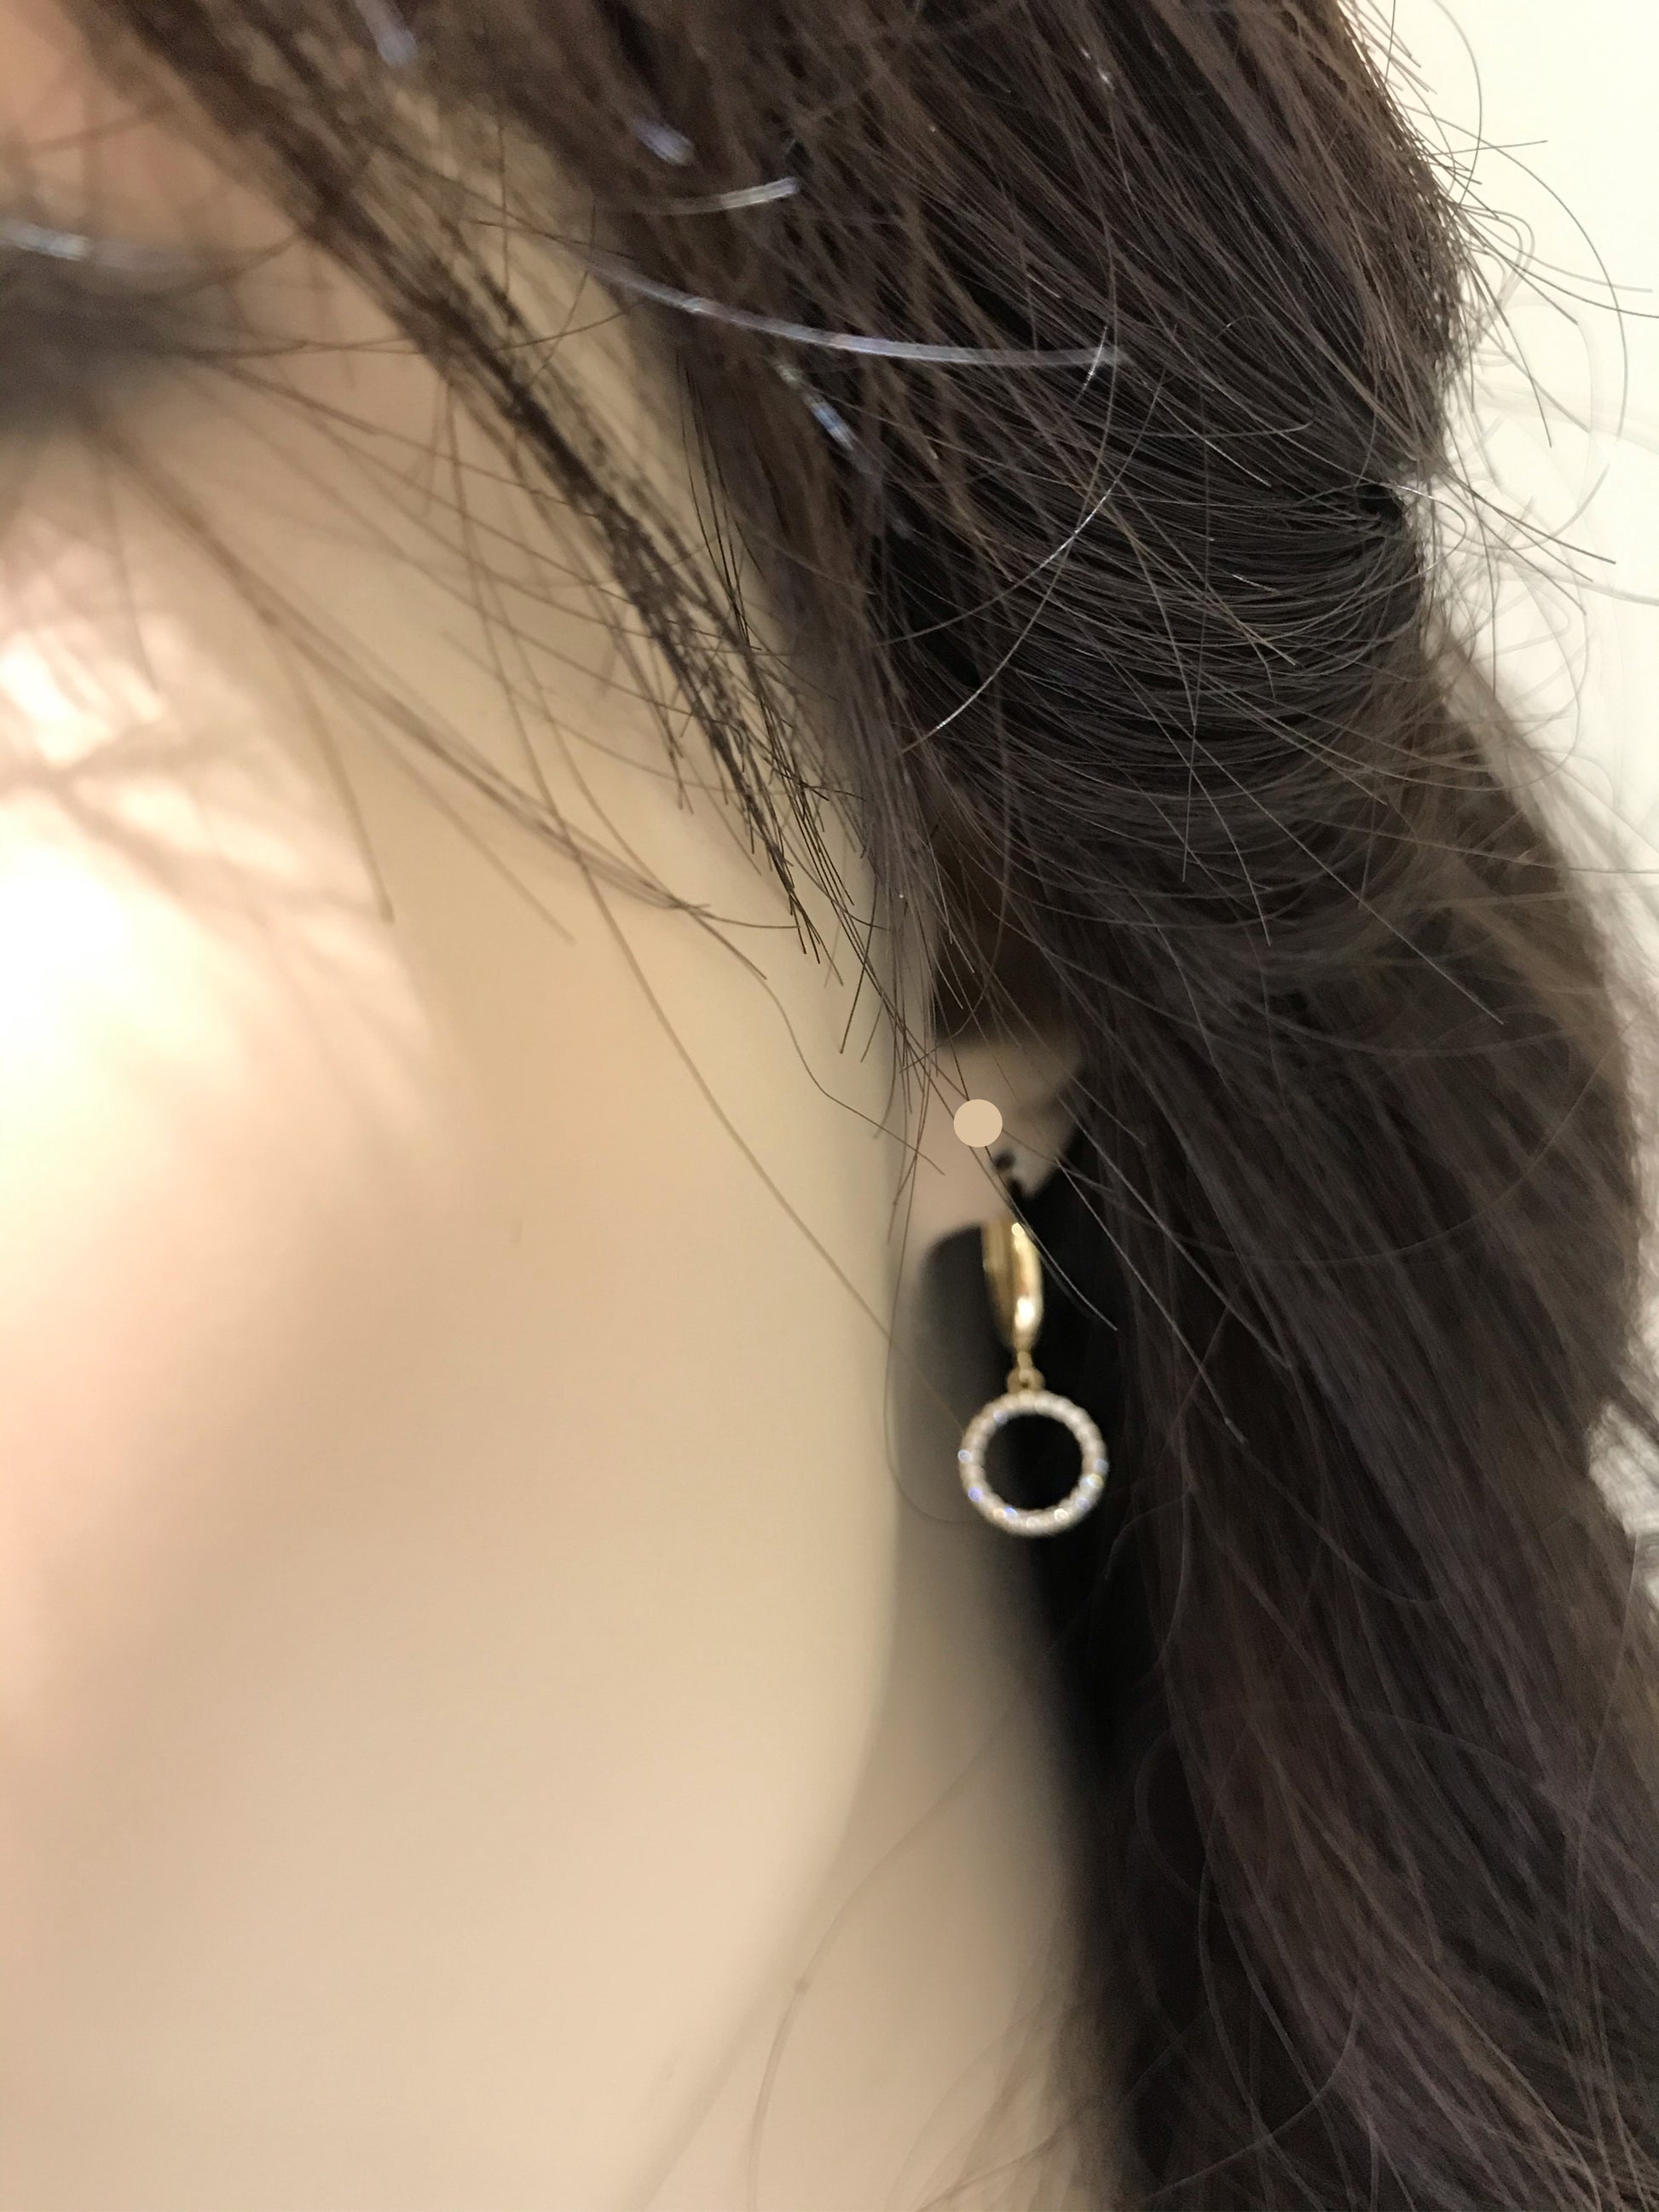 14k Small Circle Earrings - HK Jewels